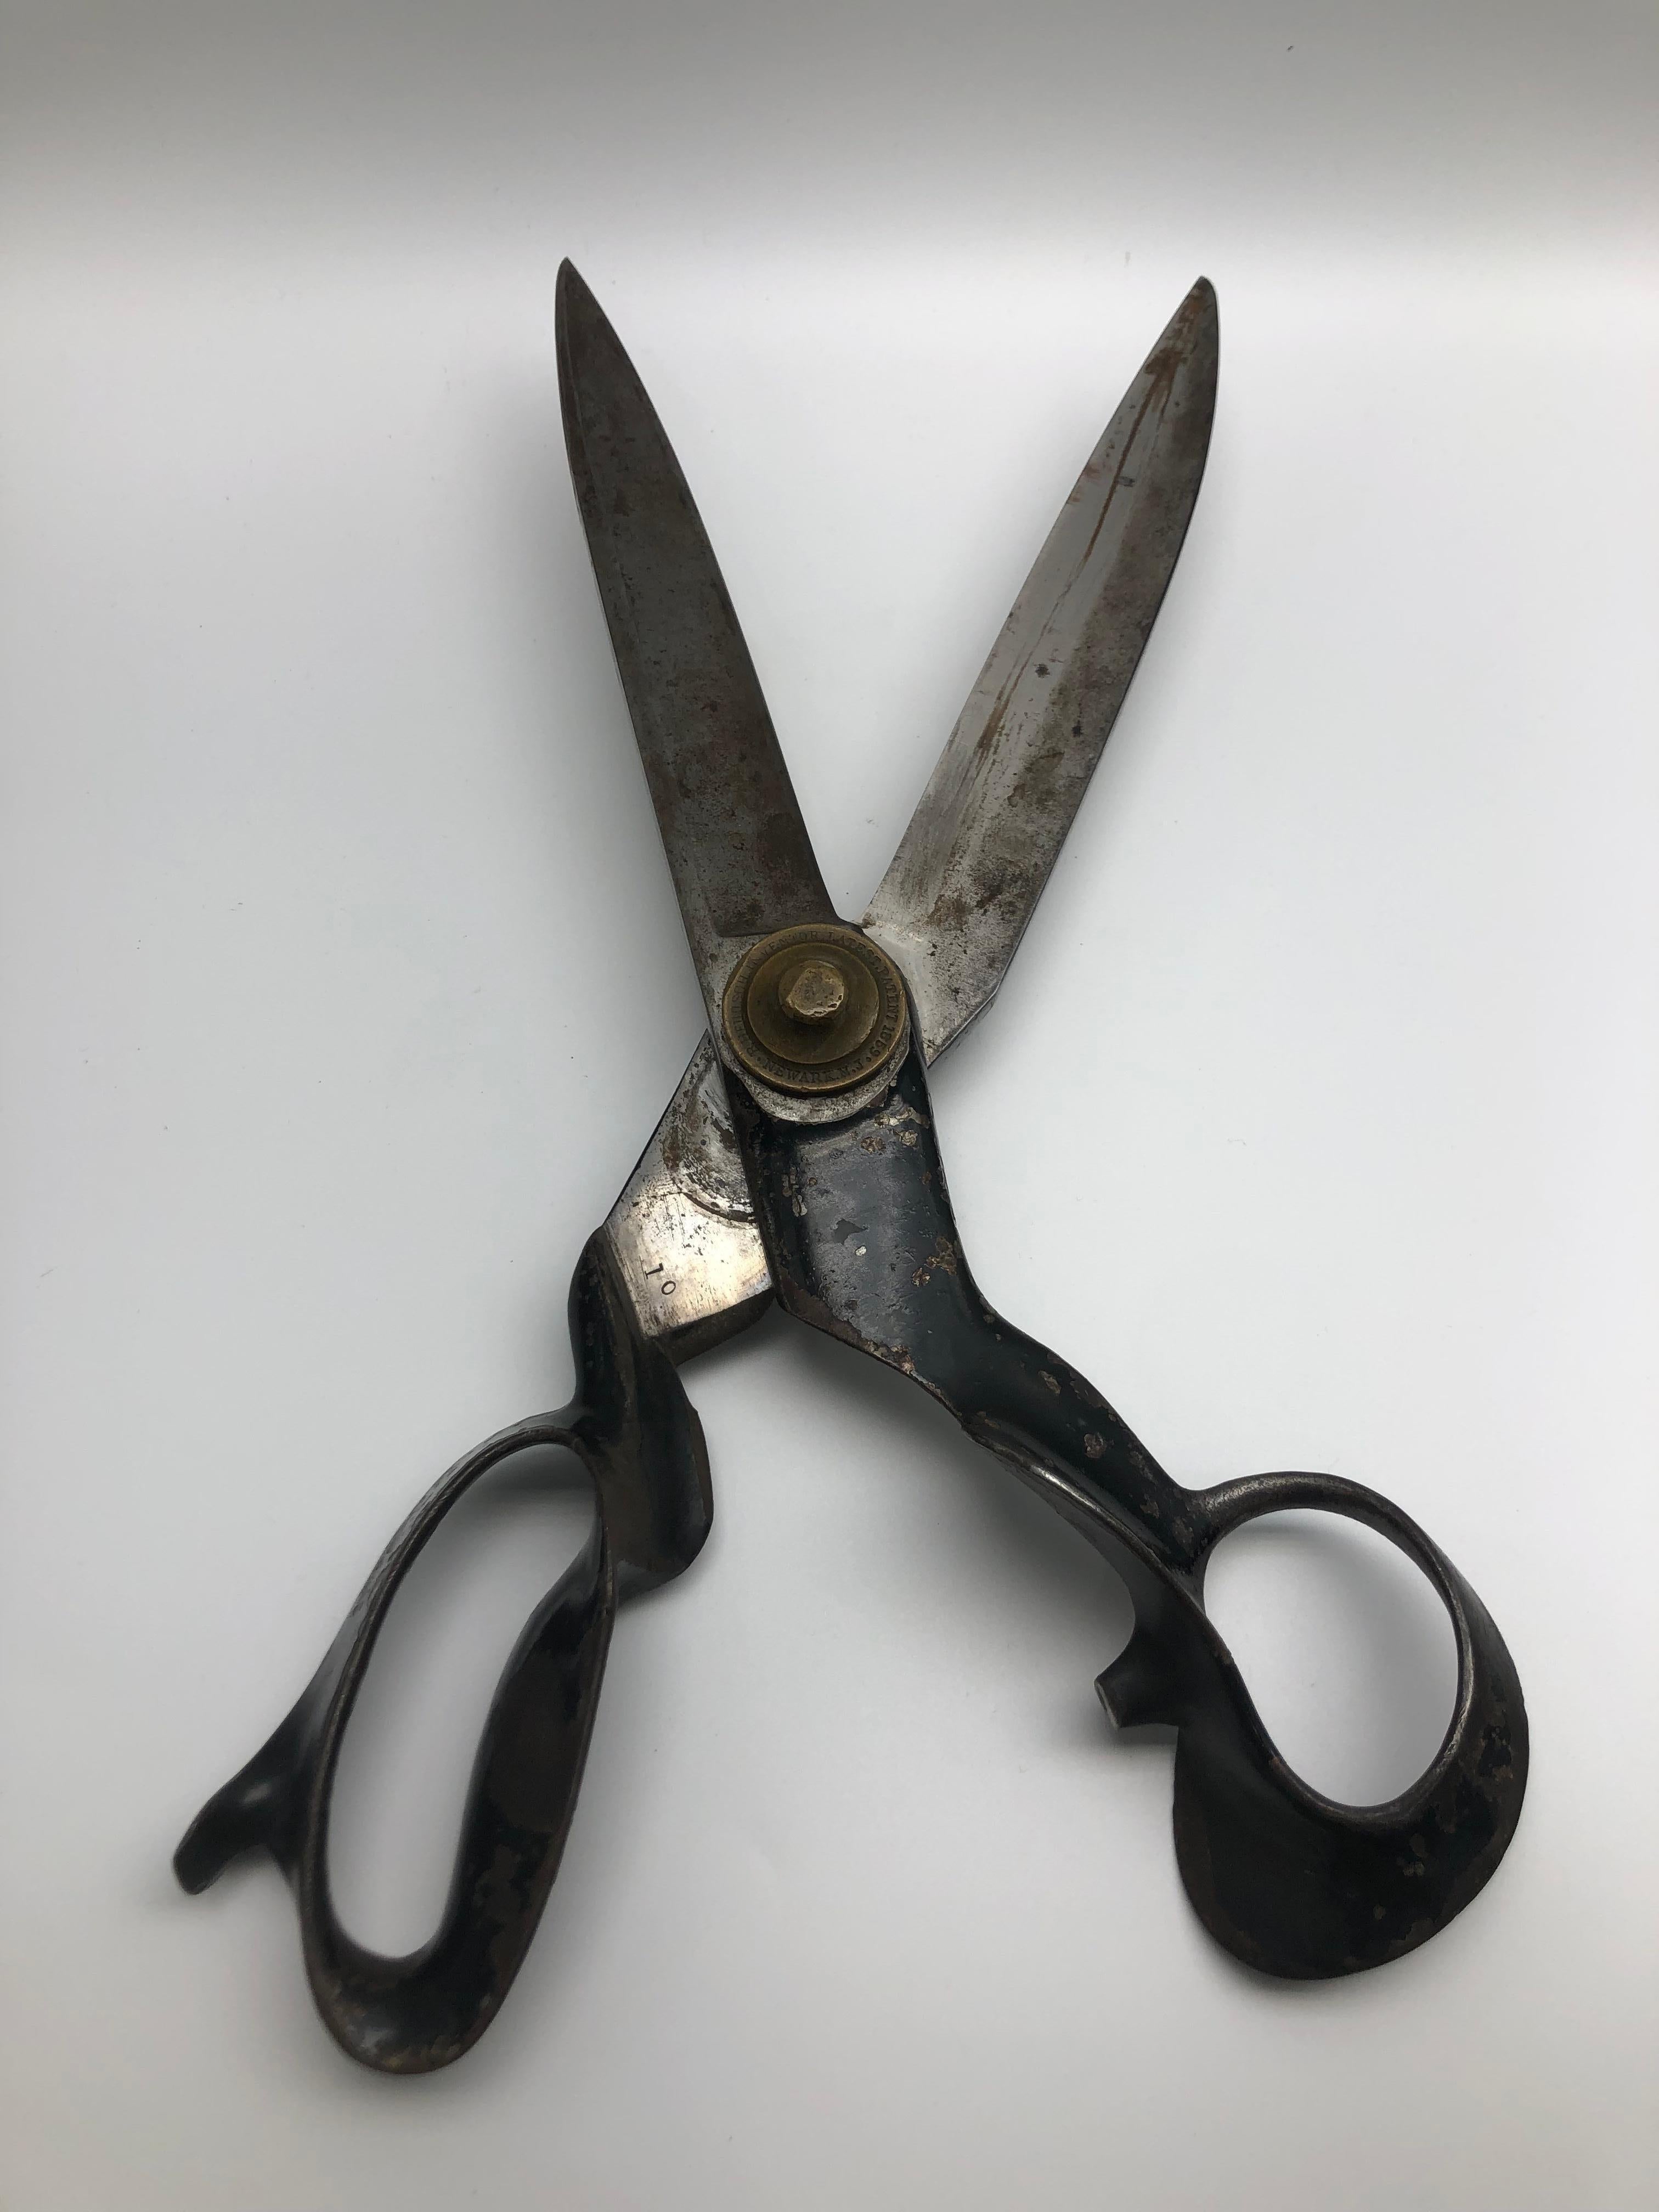 Metal Antique Mid 19th Century R. Heinisch Furrier Shears, Scissors 1859